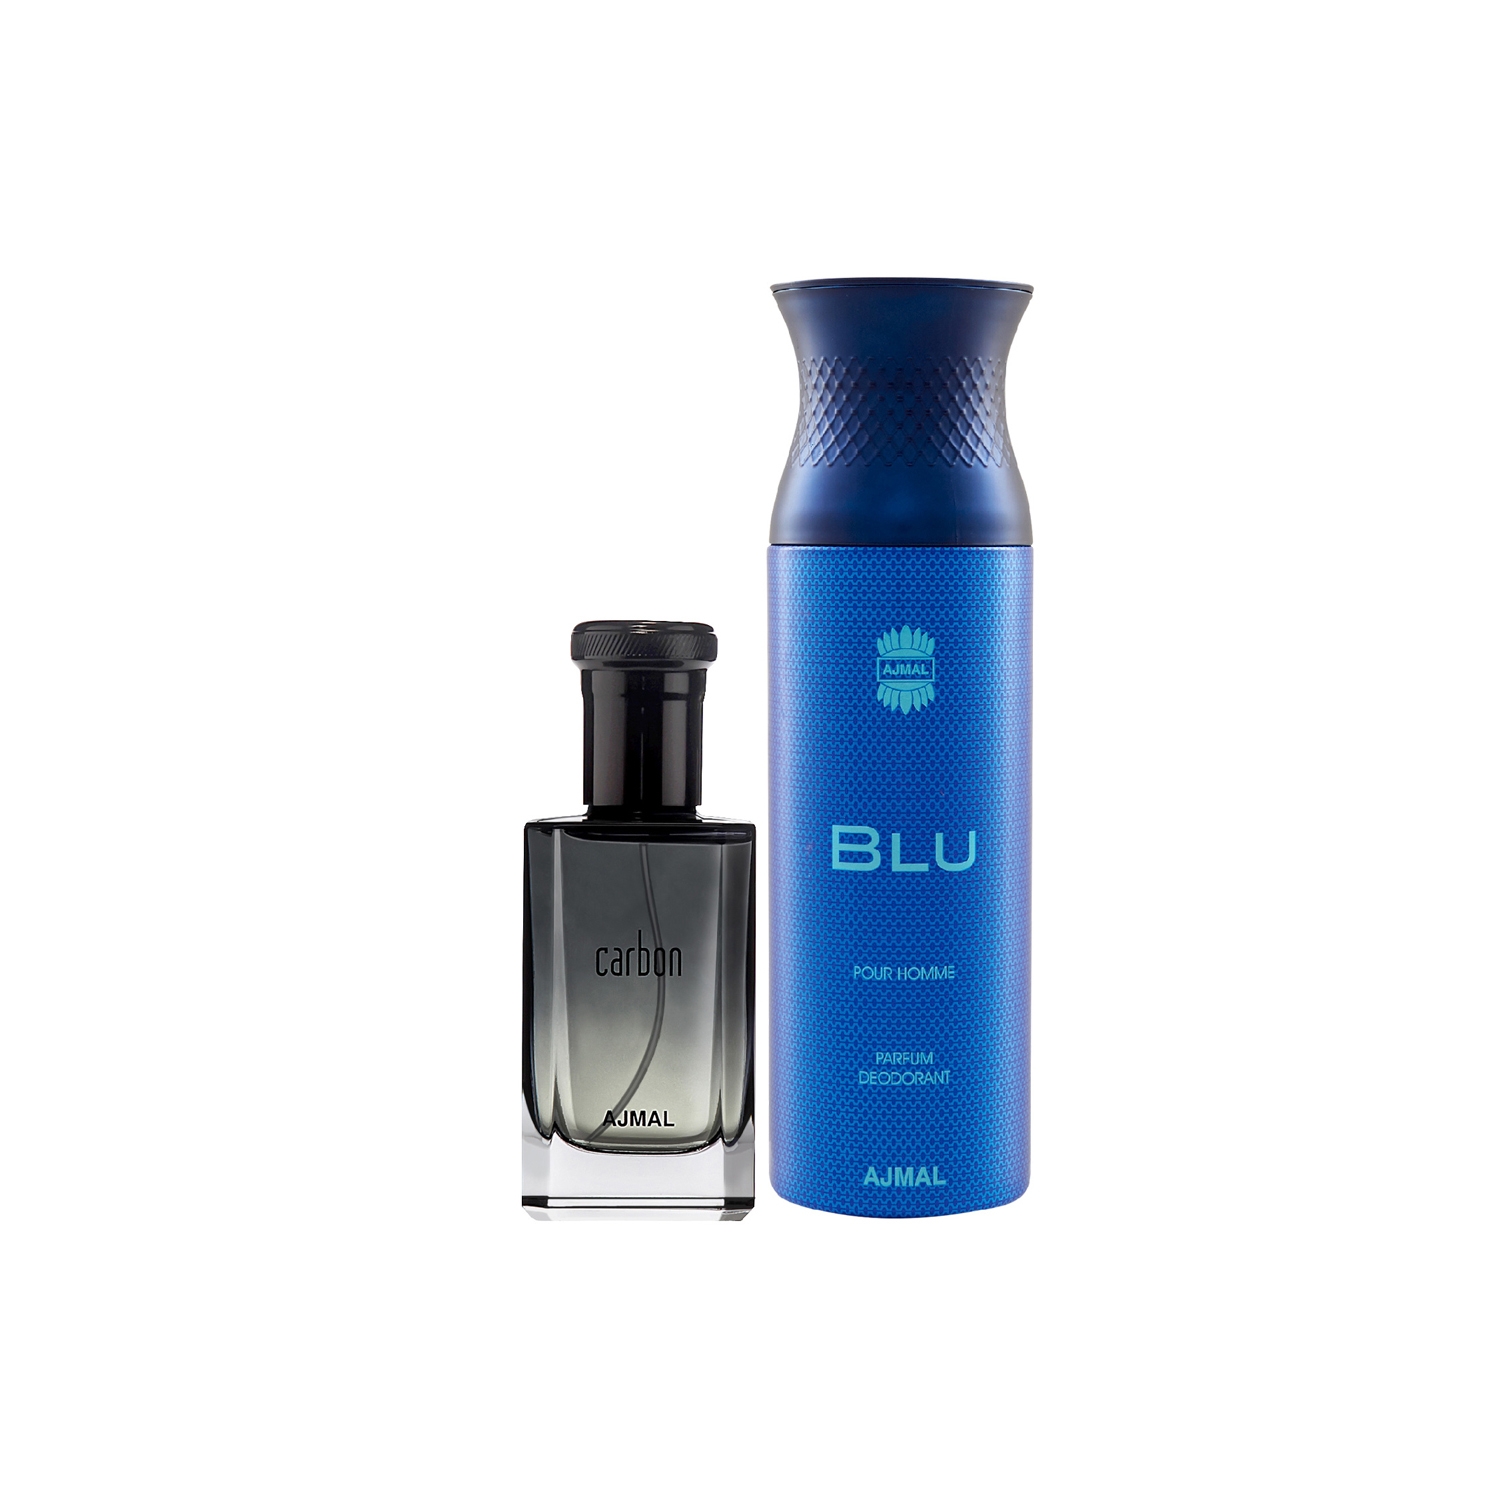 Ajmal | Ajmal Carbon EDP Citrus Spicy Perfume 100ml for Men and Blu Homme Deodorant Aquatic Woody Fragrance 200ml for Men+ 2 Parfum Testers FREE